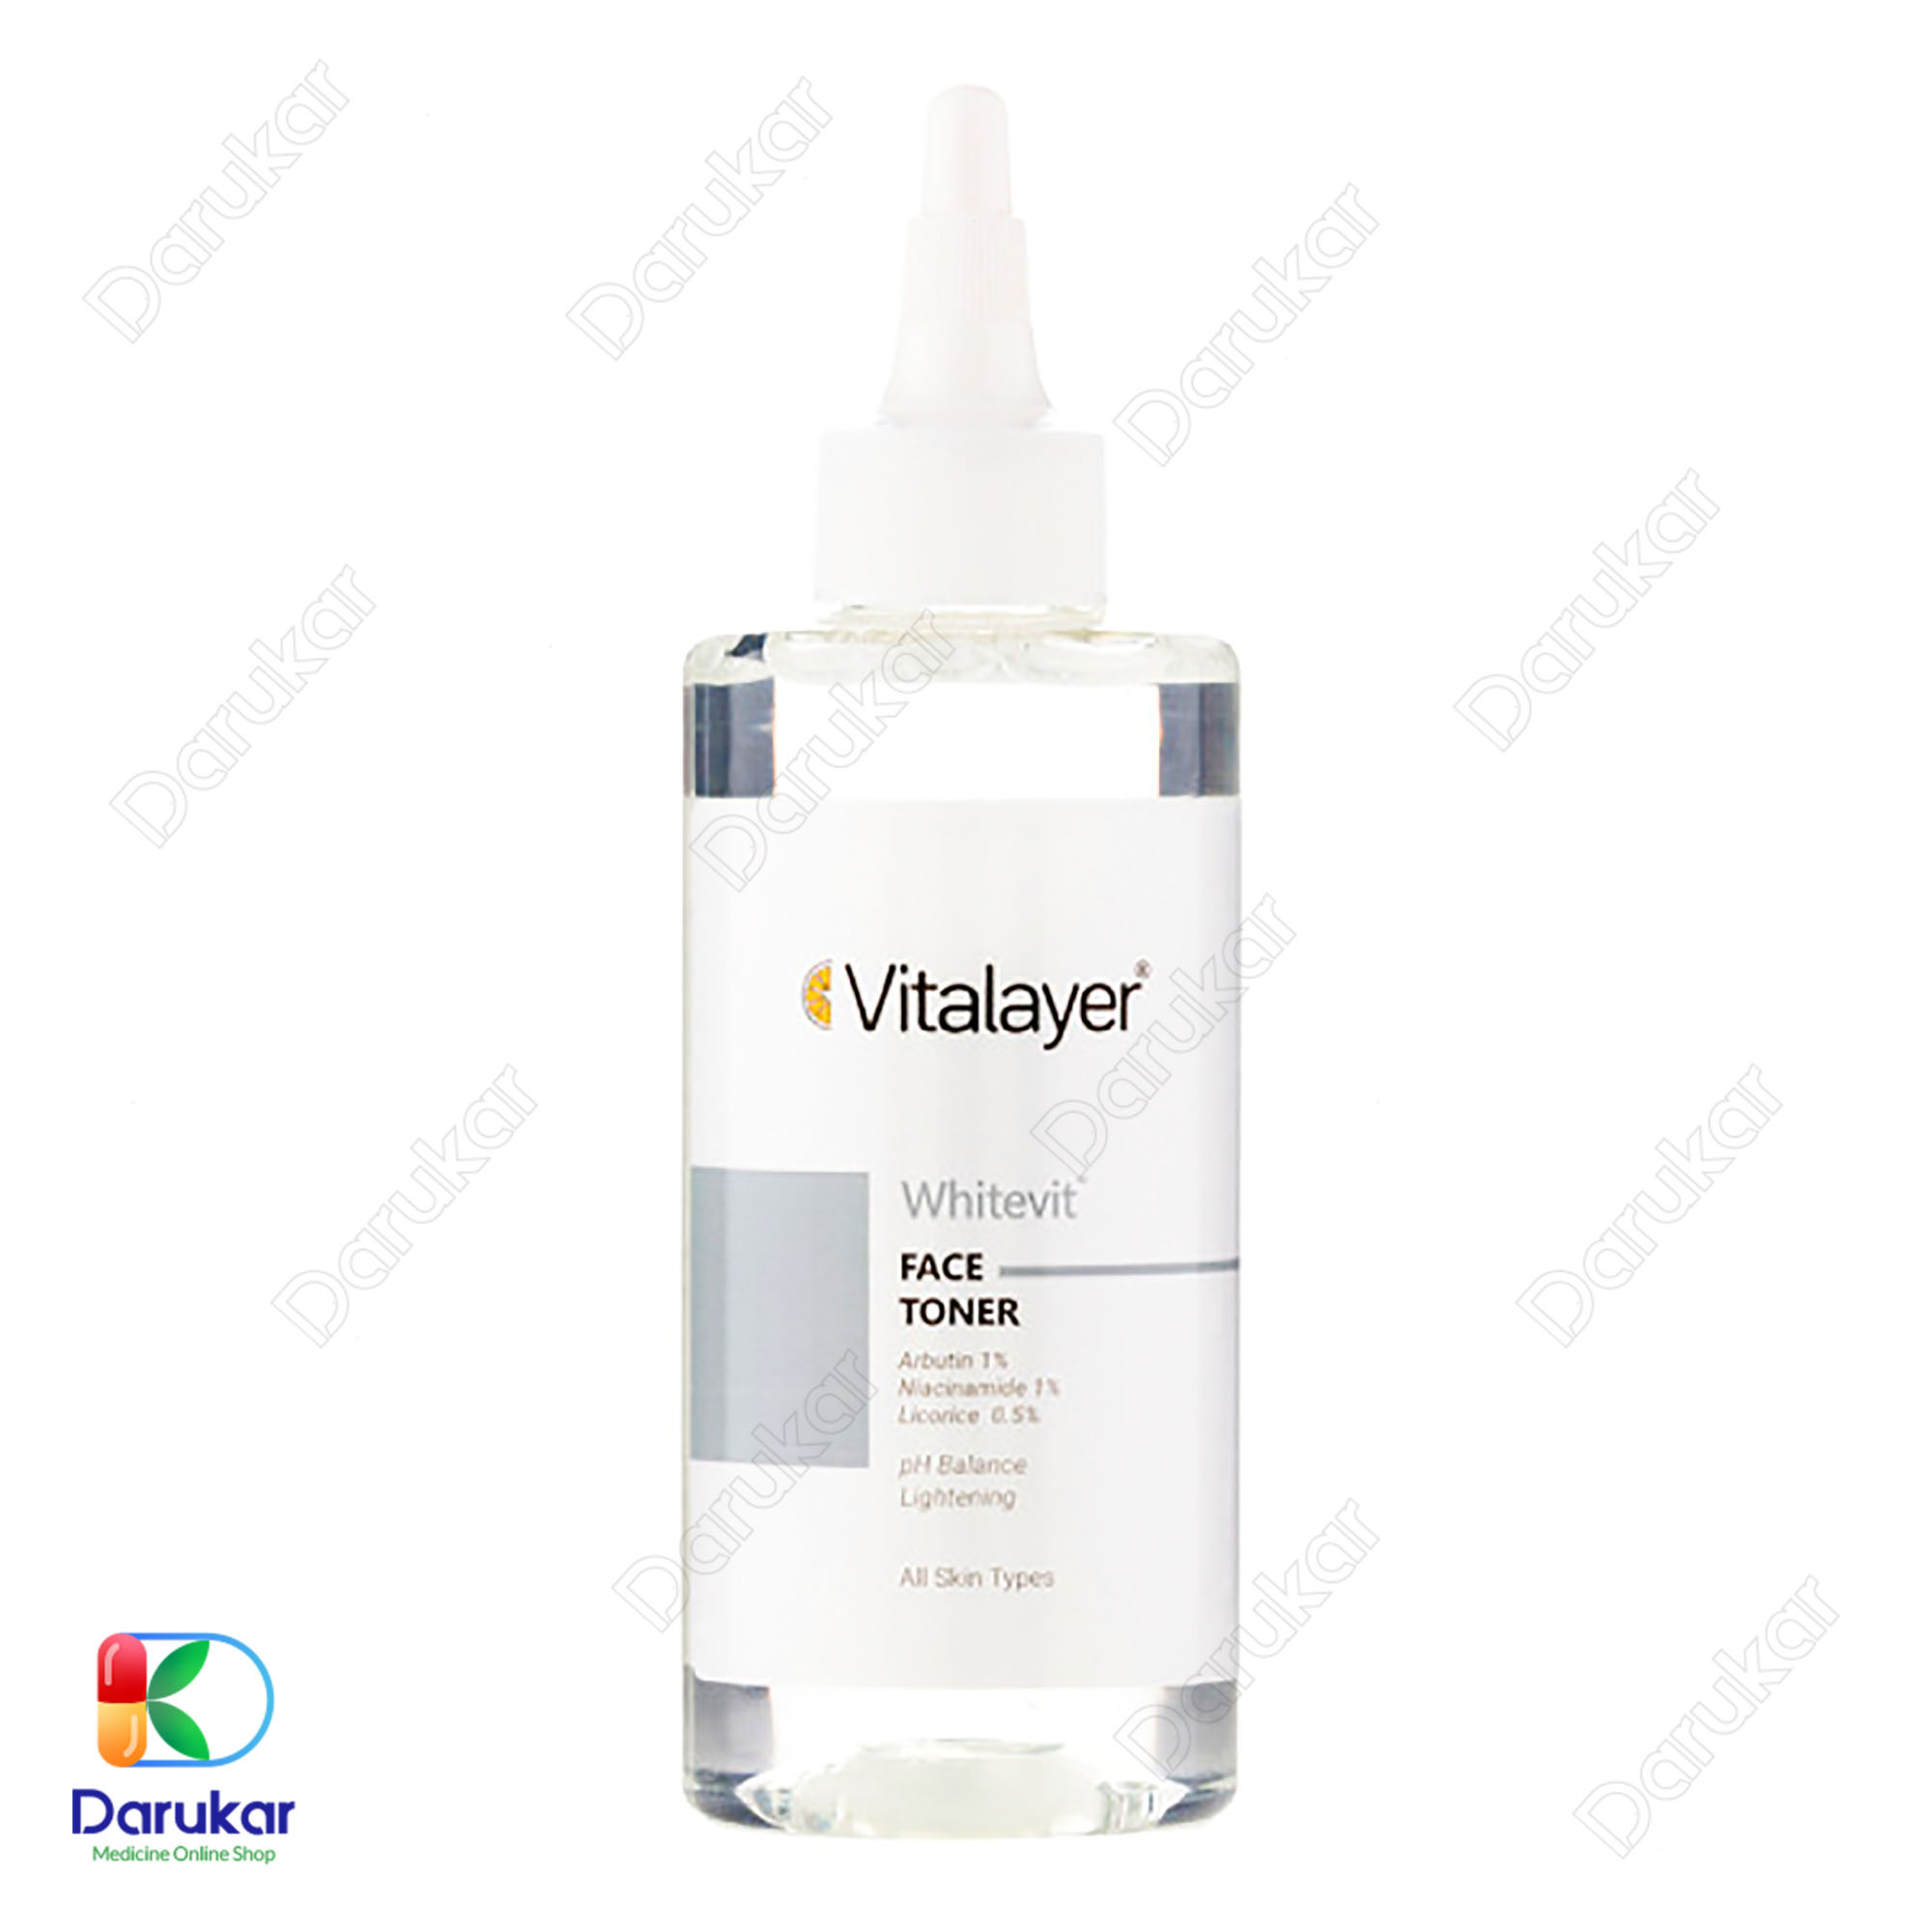 vitalayer whitevit face toner 200 ml 1 1